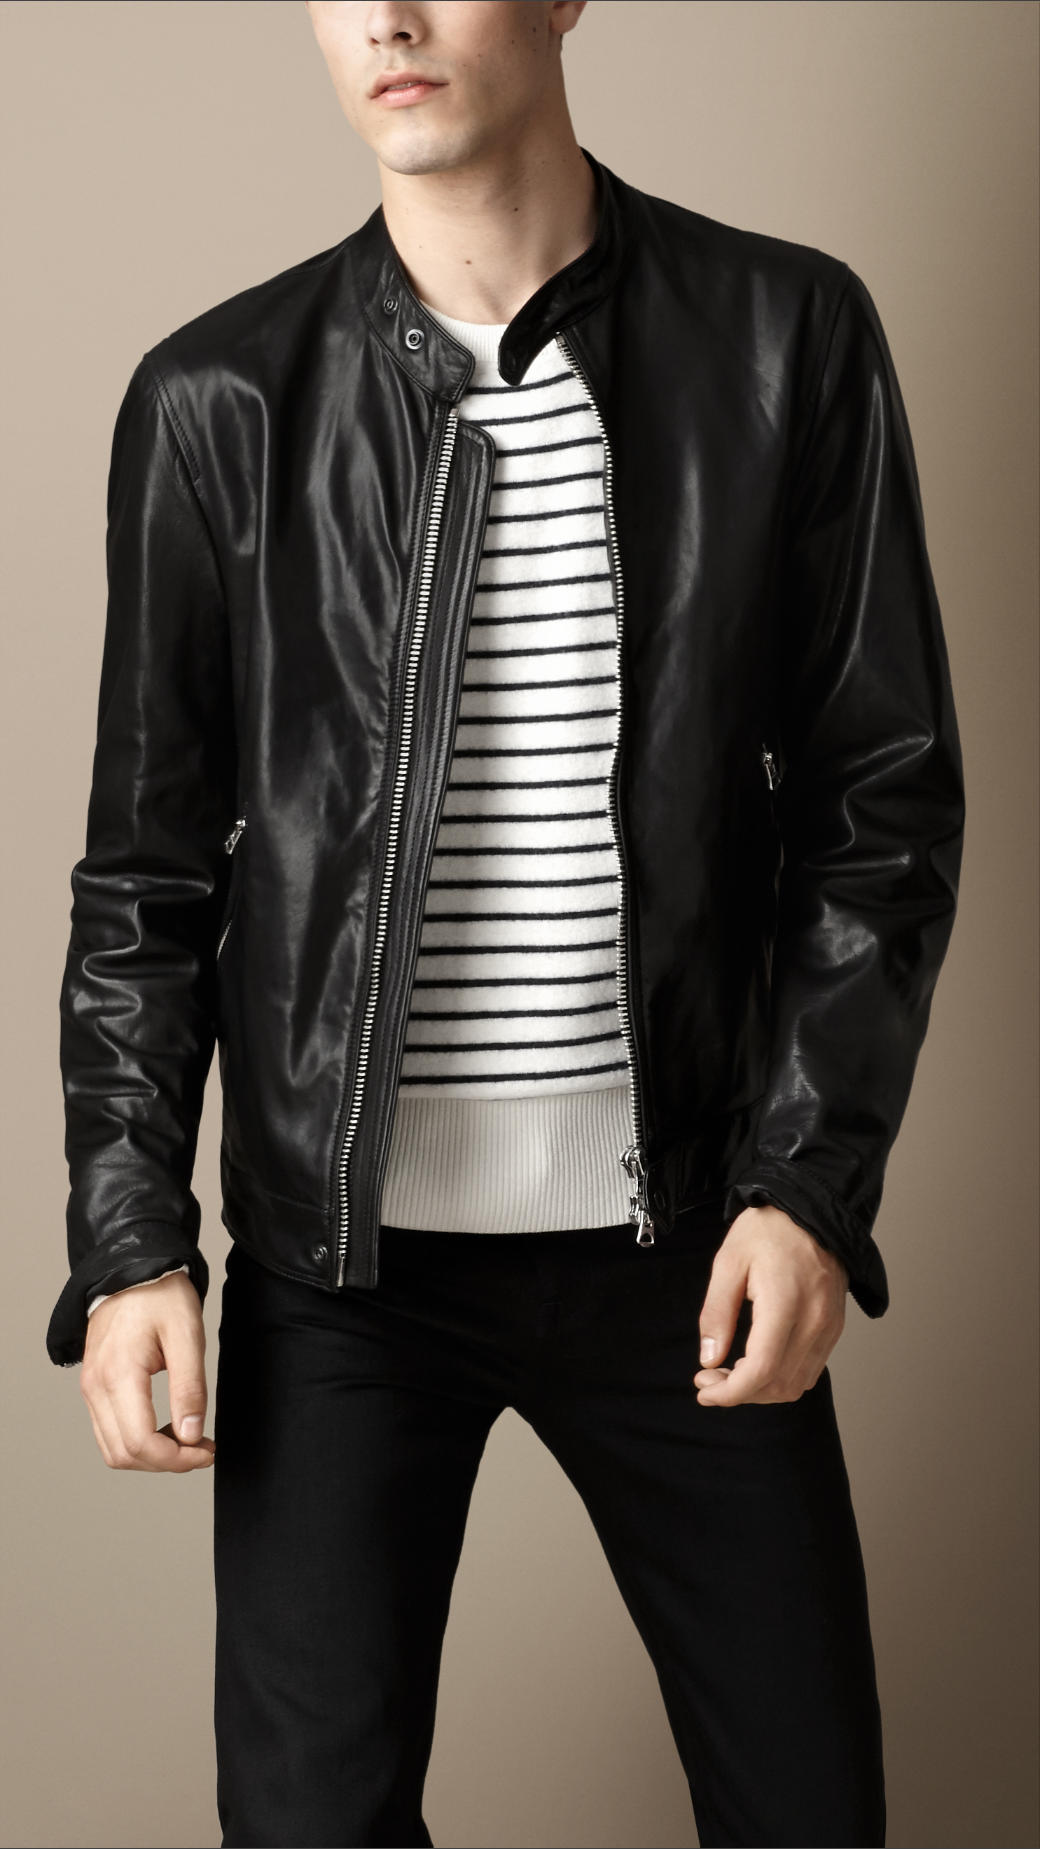 Burberry Soft Leather Racer Jacket in Black for Men - Lyst